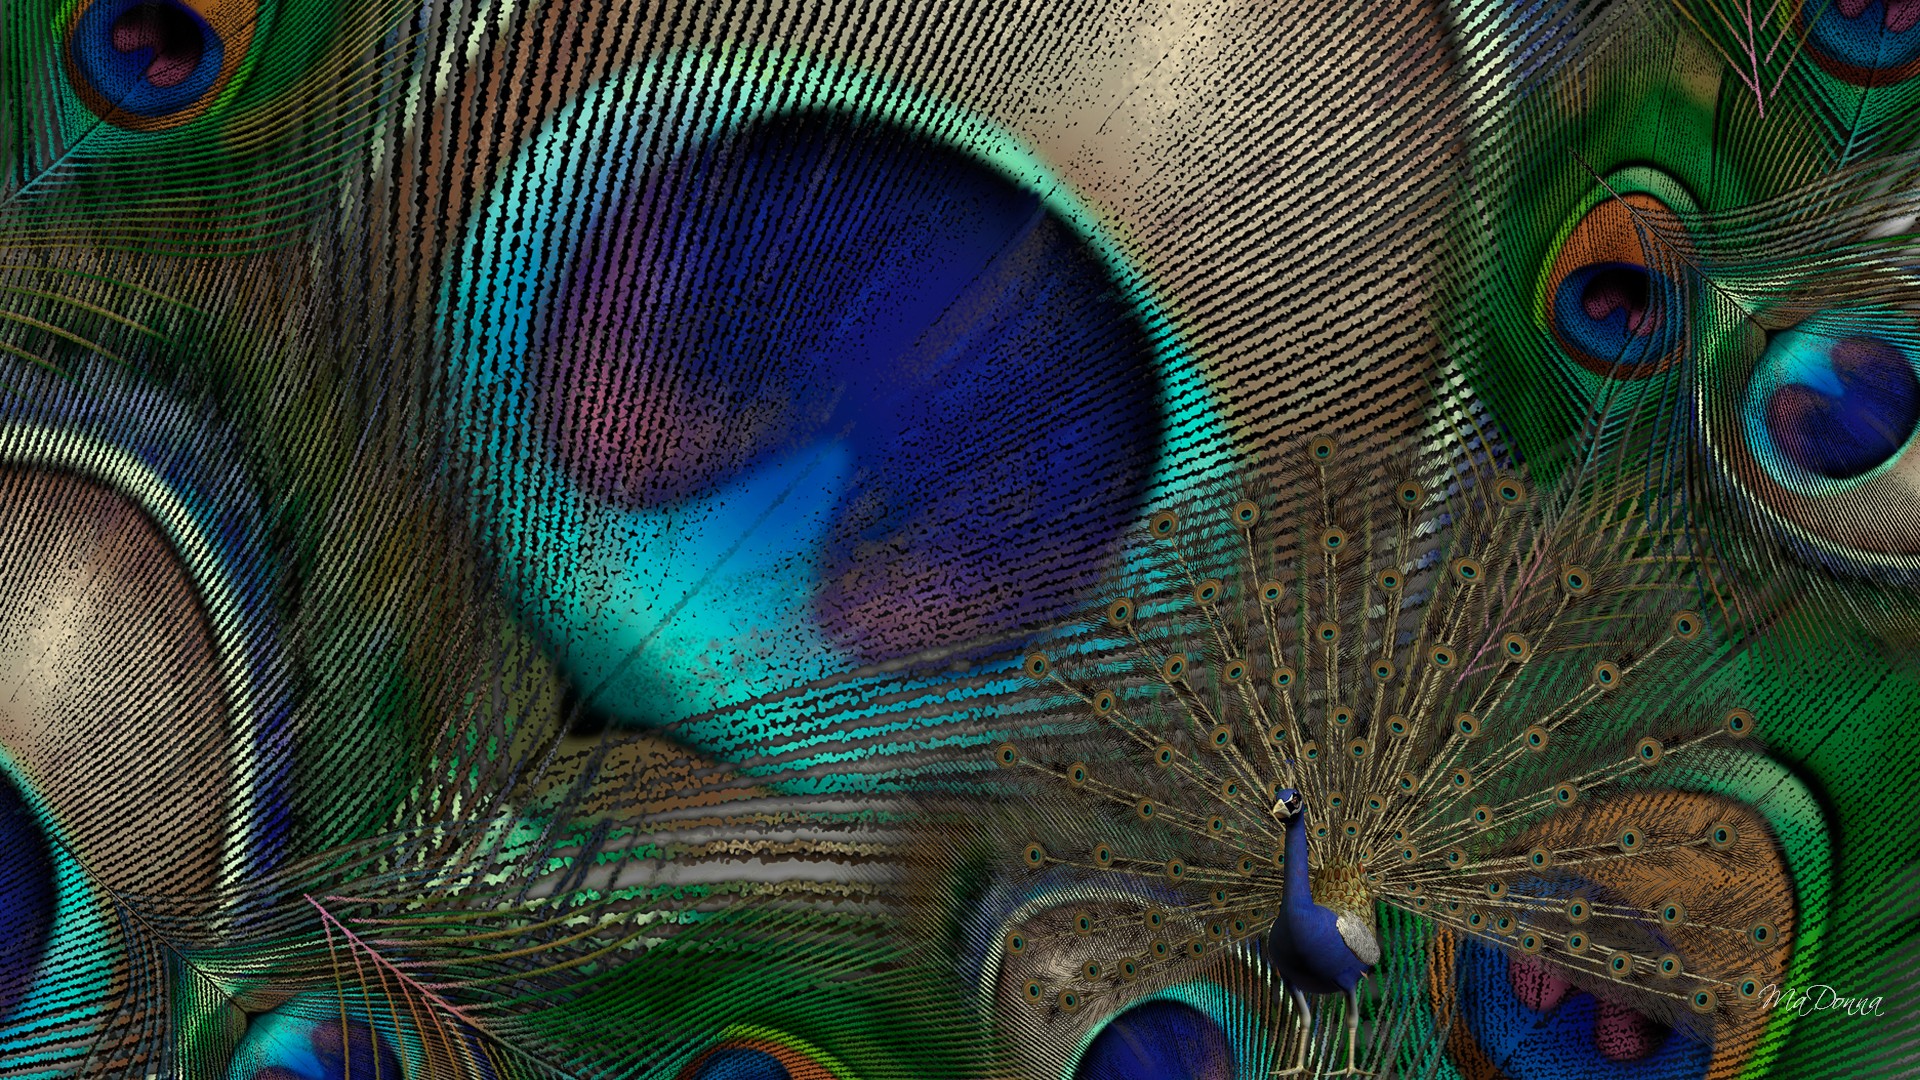 Download Peacock Feathers Wallpapers Free Pixelstalk Net